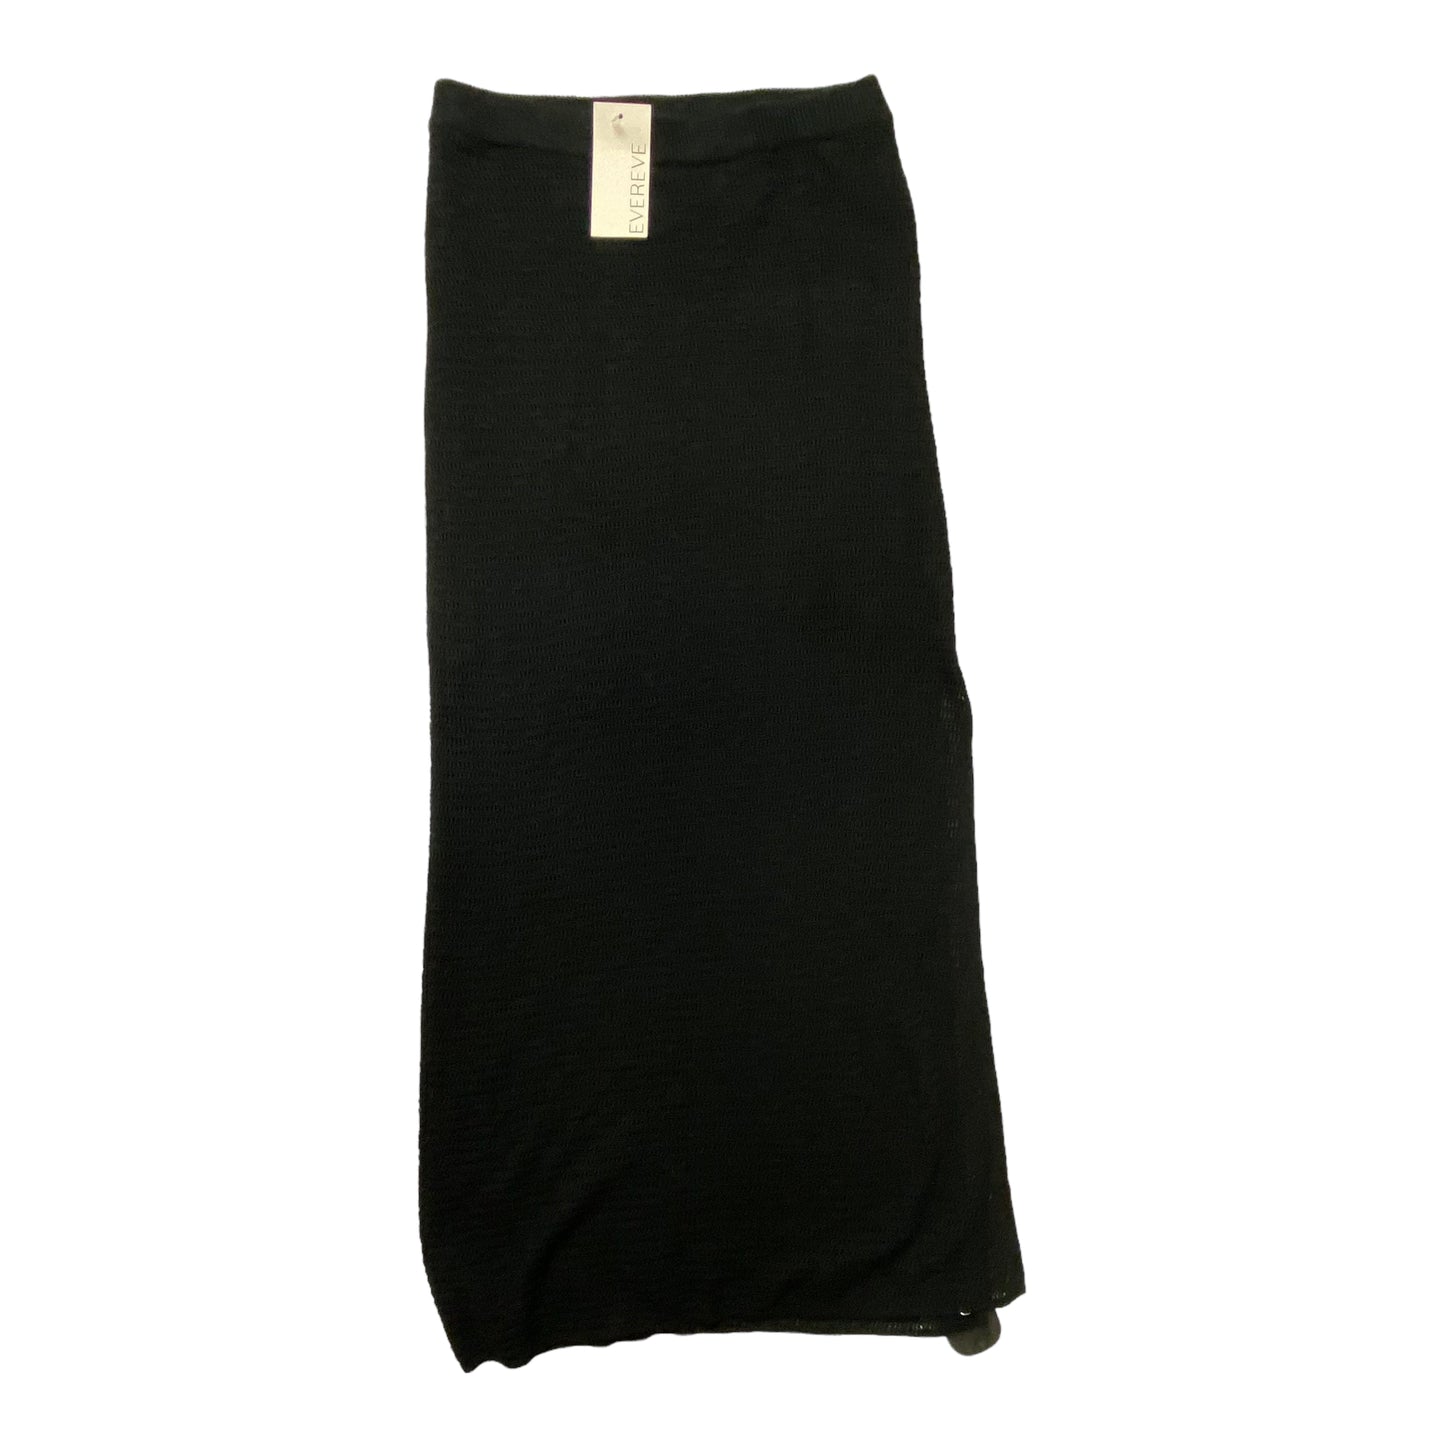 Black Skirt Maxi Z Supply, Size S